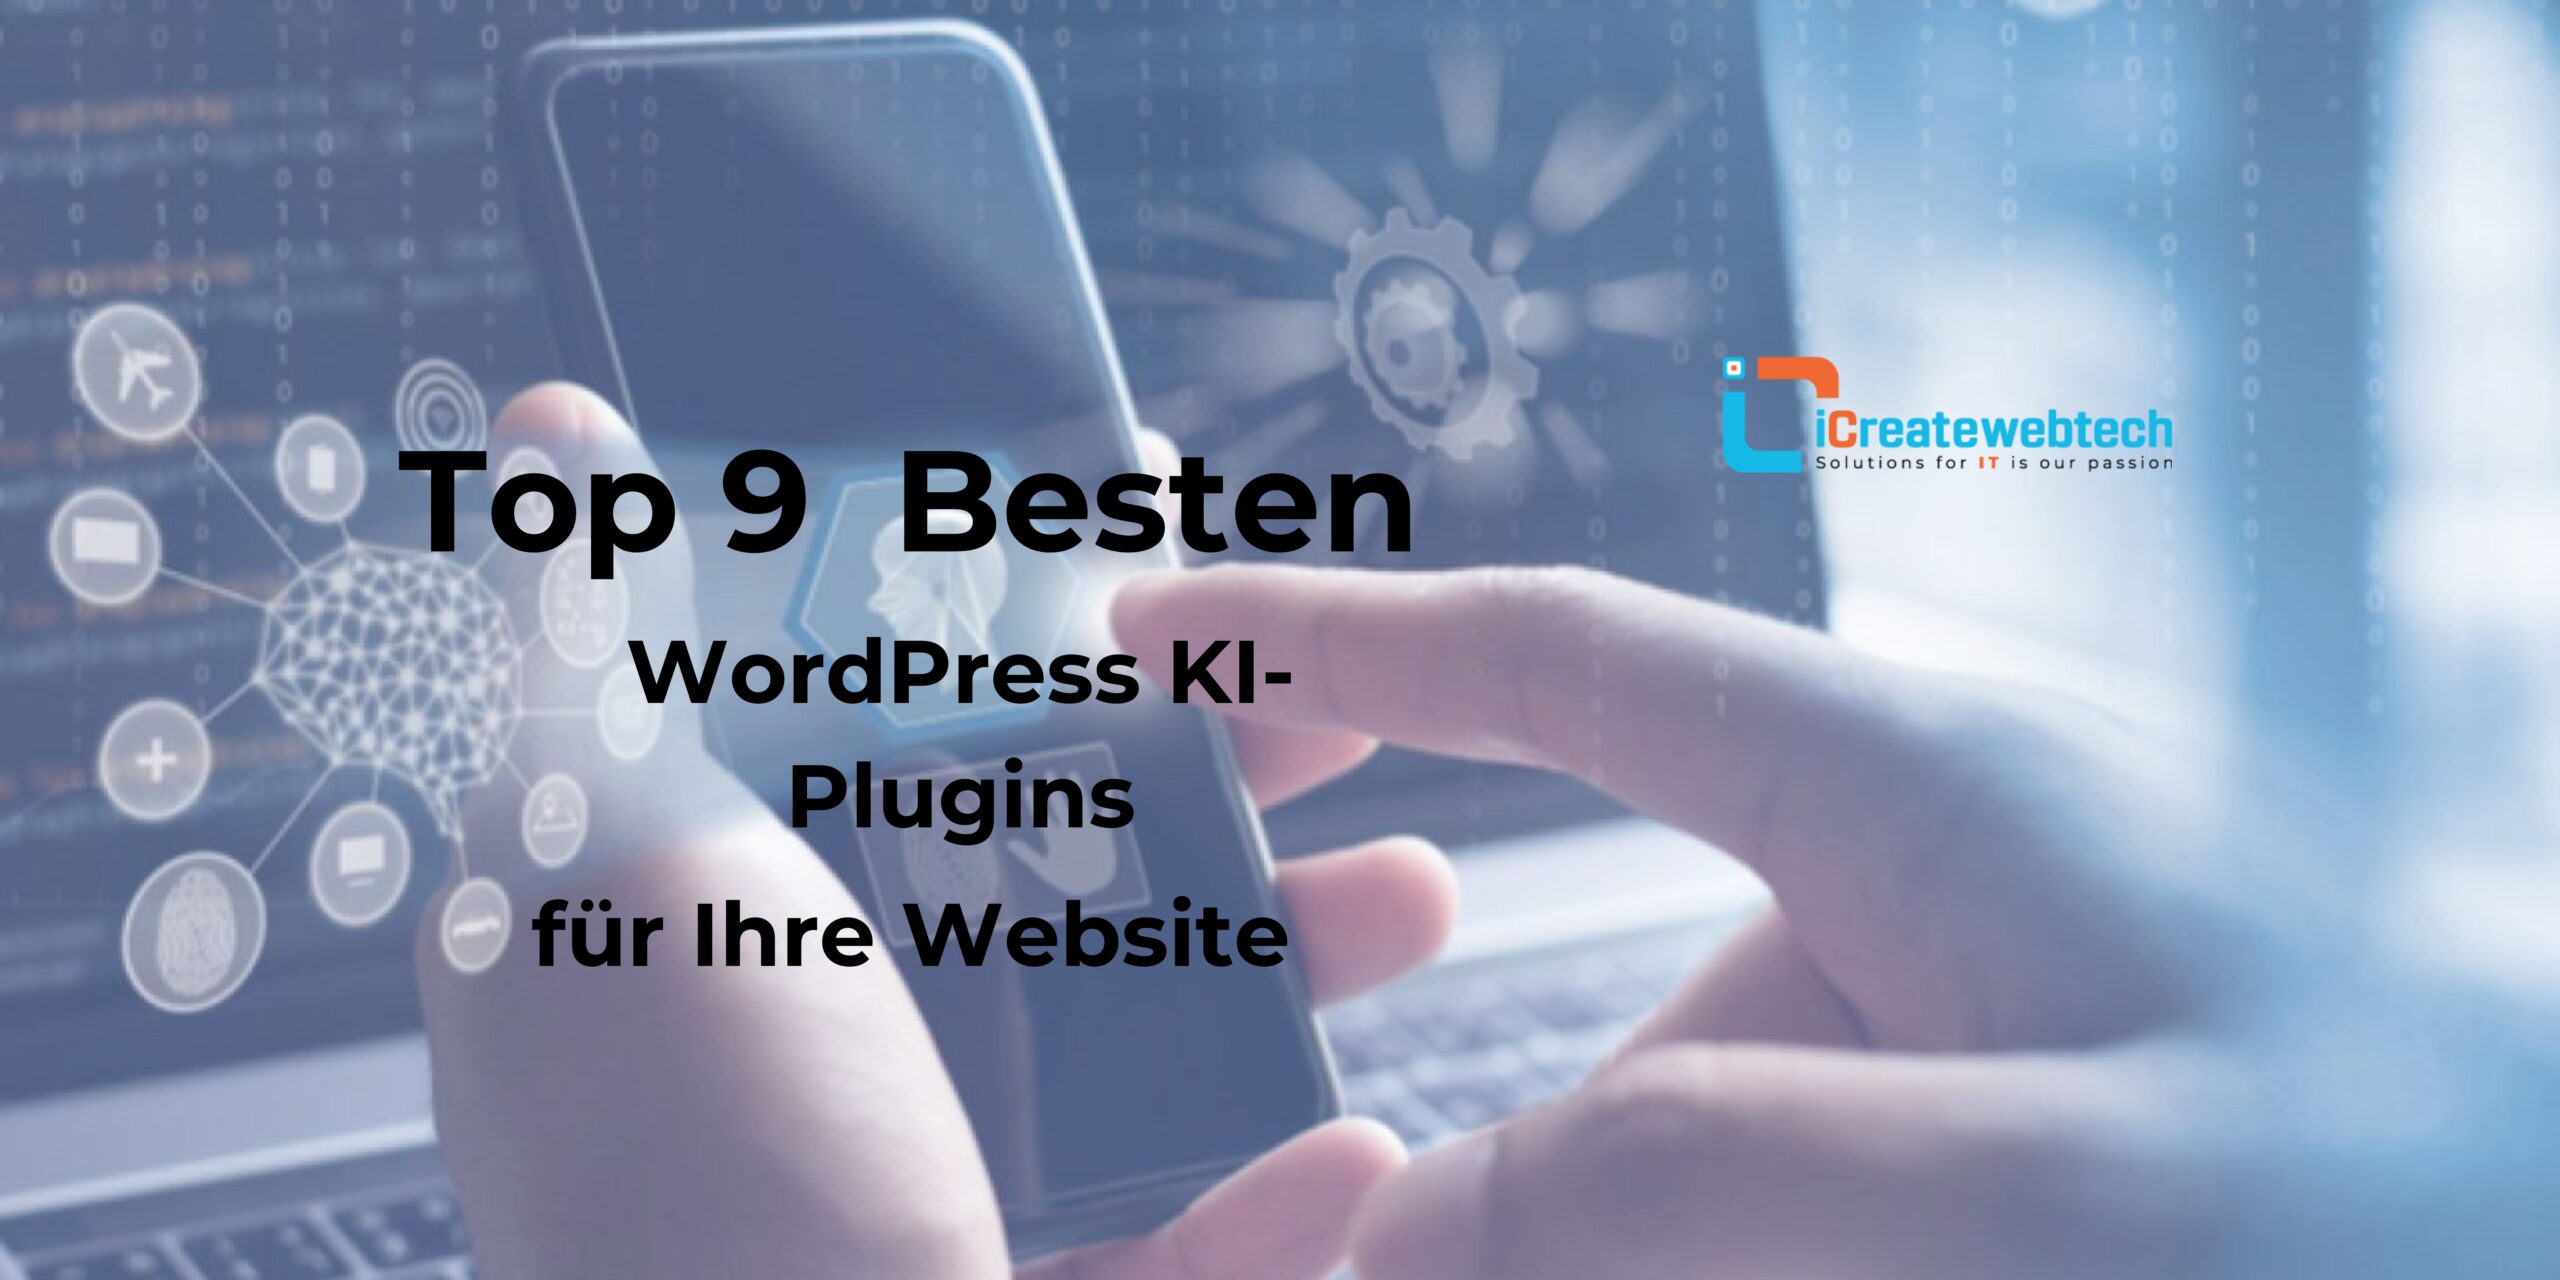 KI-Plugins für WordPress